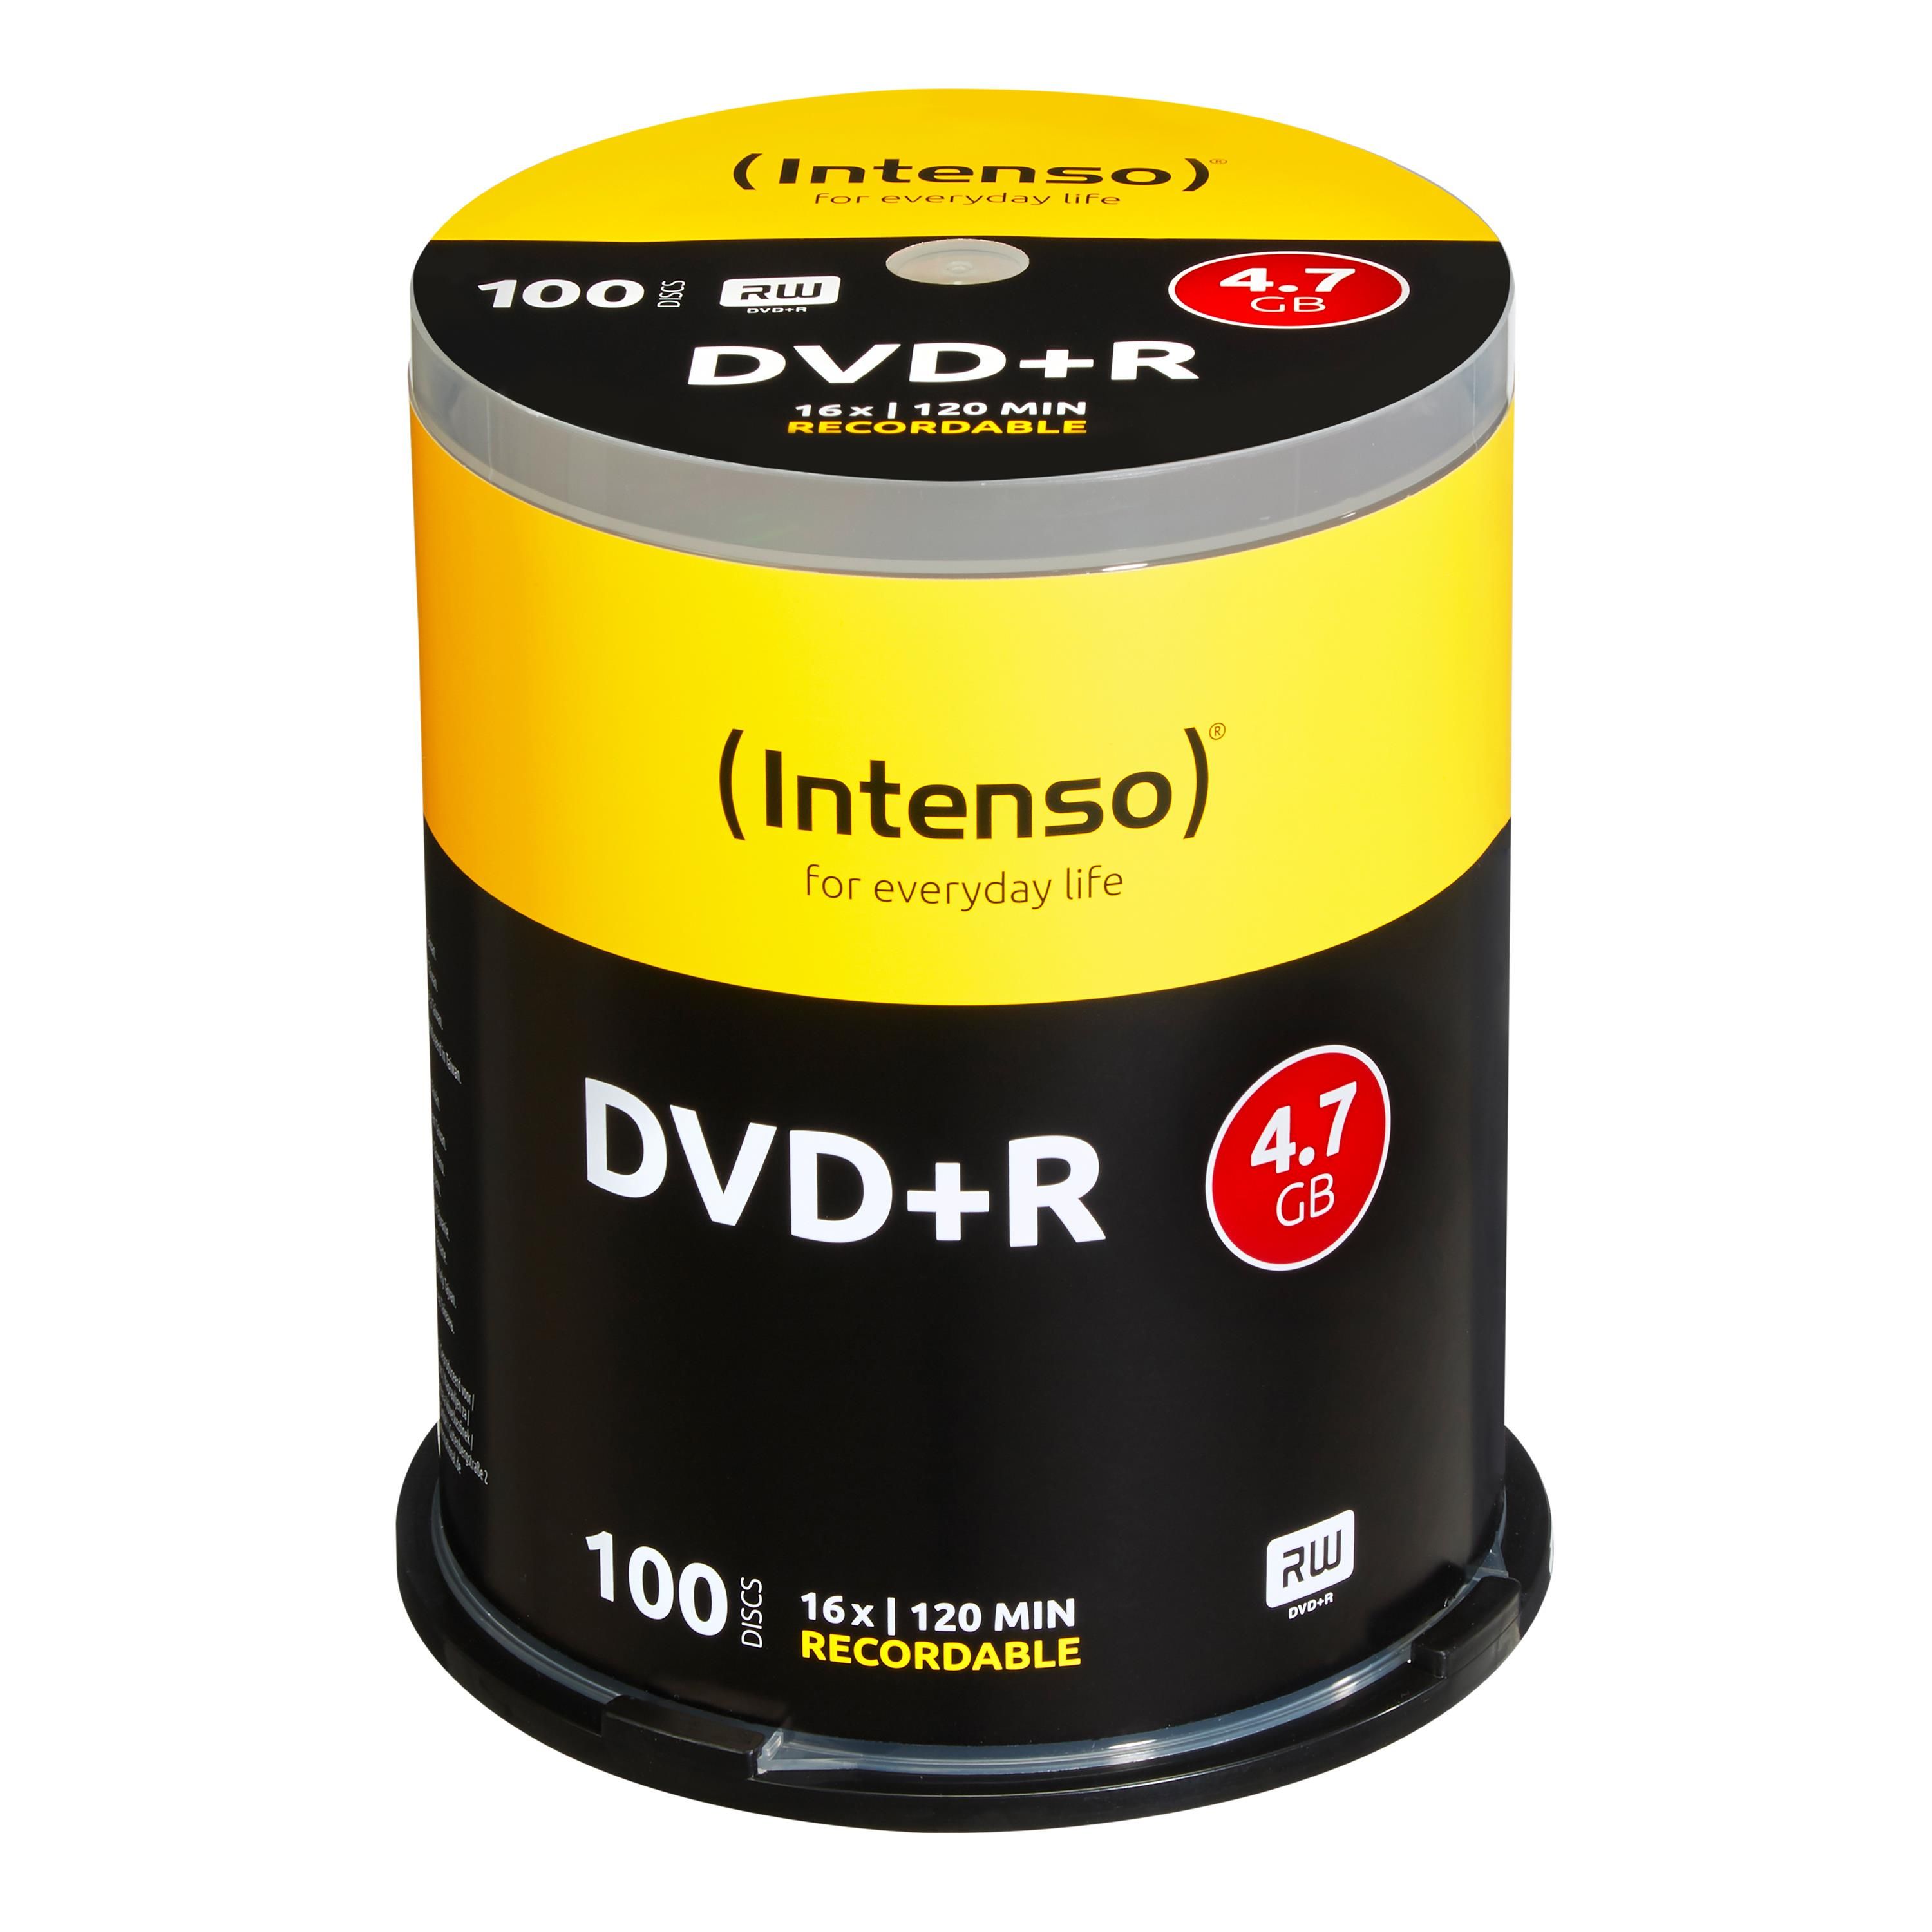 Intenso Dvd+r 4,7gb 100pcs